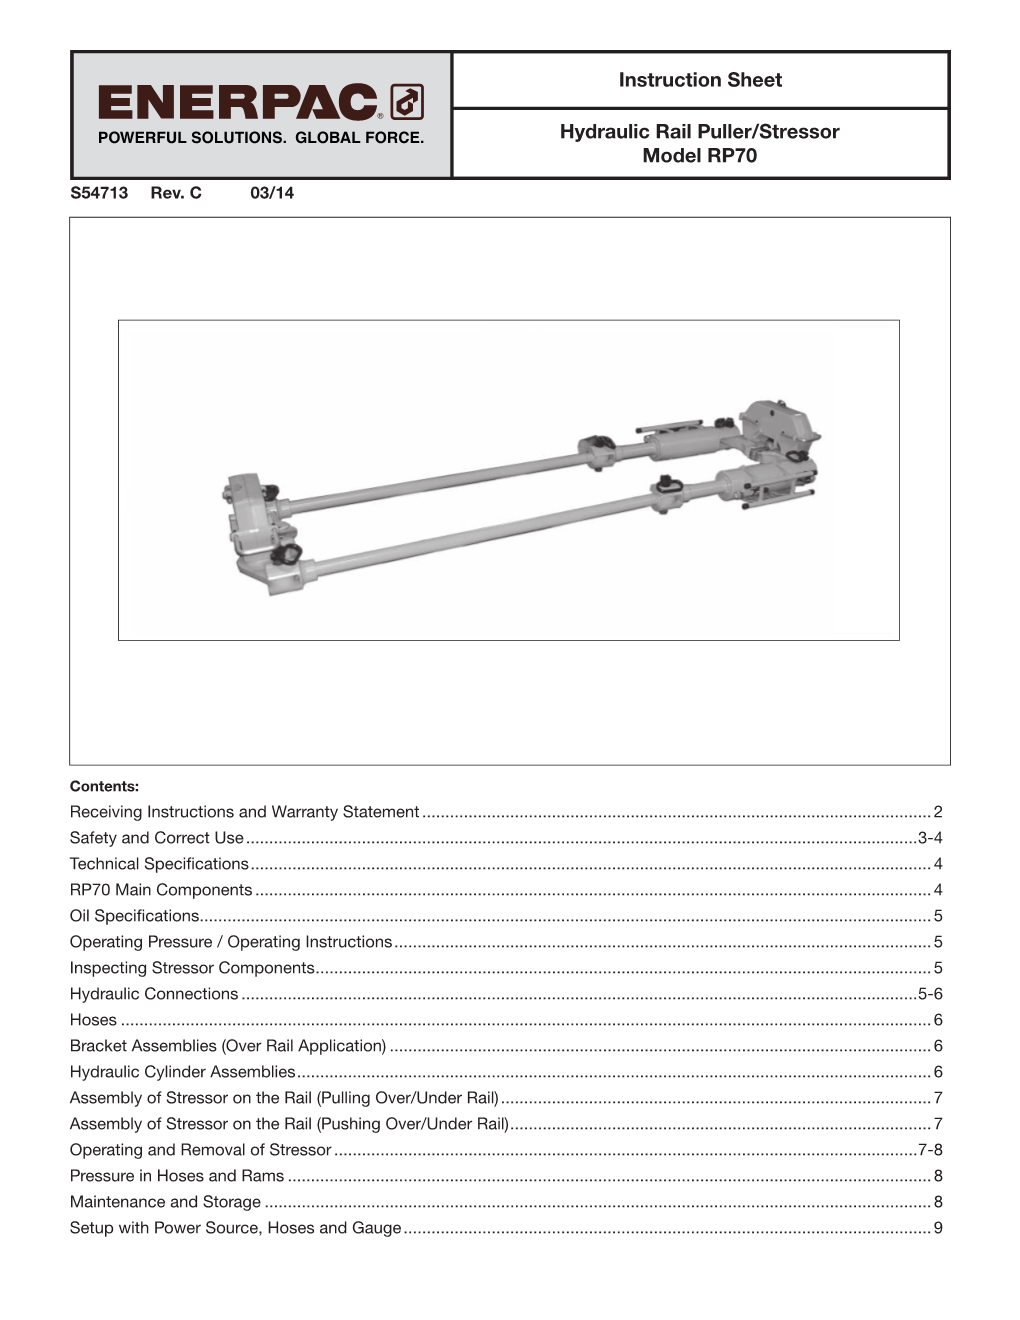 Instruction Sheet Hydraulic Rail Puller/Stressor Model RP70